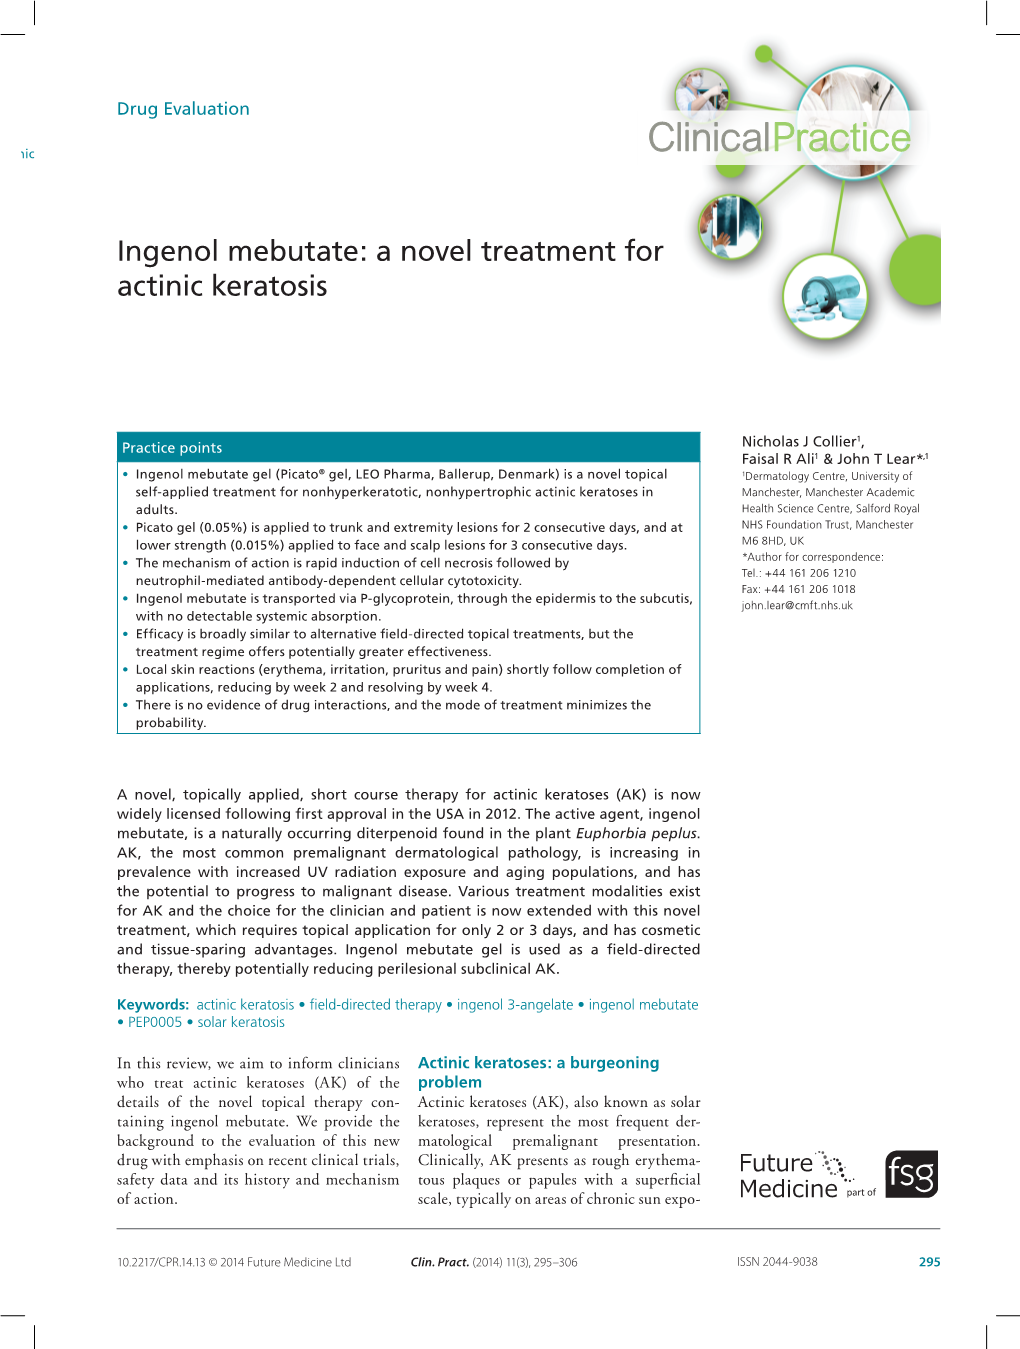 Ingenol Mebutate: a Novel Treatment for Actinic Keratosis